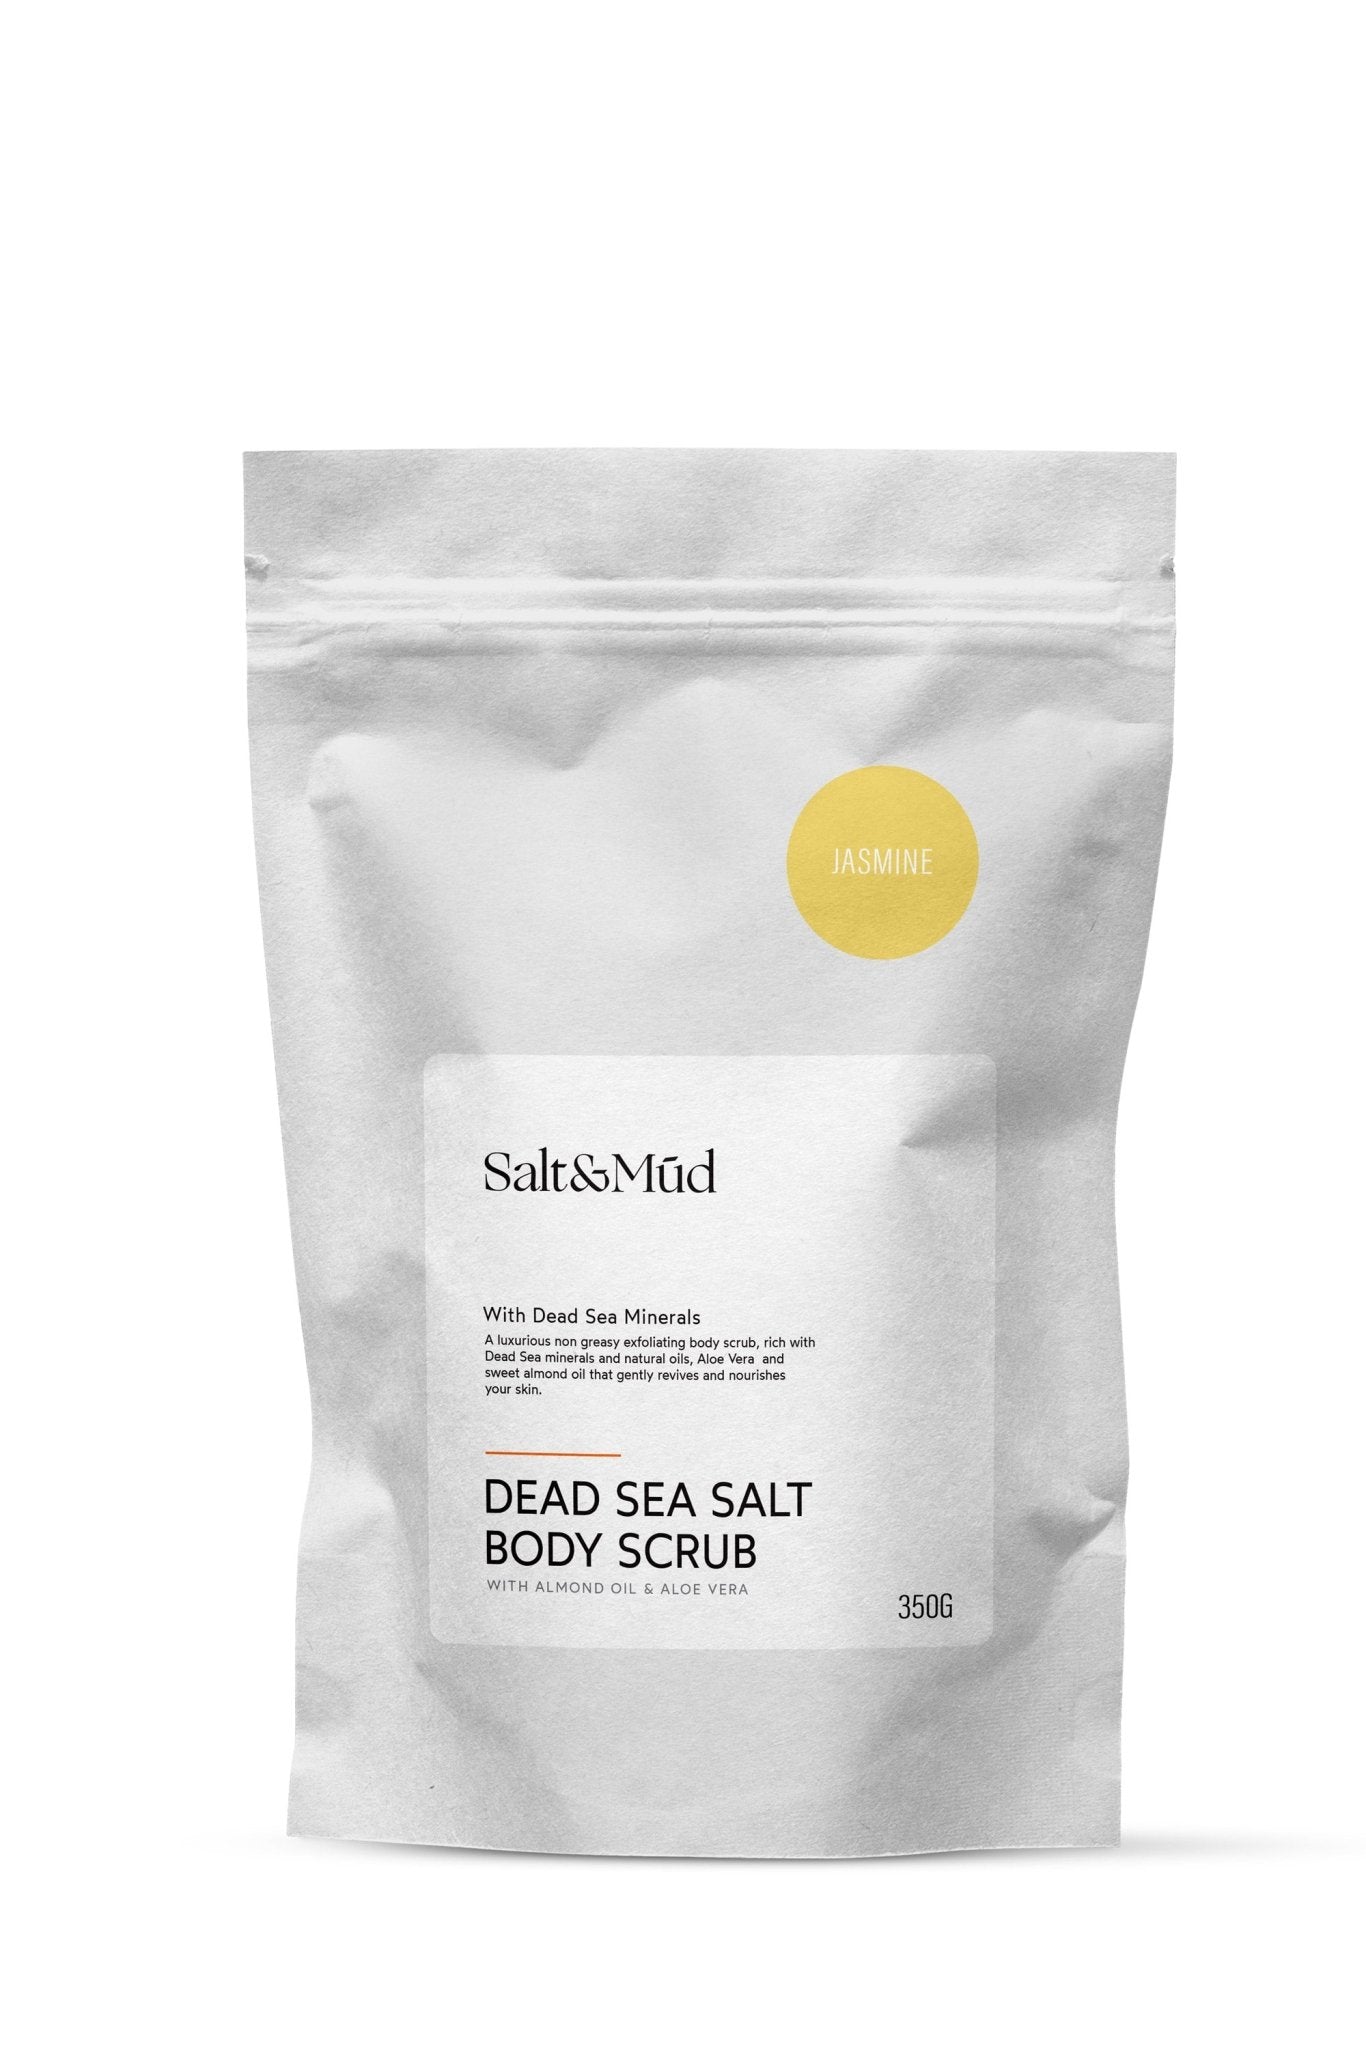 Dead Sea Salt Body Scrub Jasmine 350G - Salt And Mud